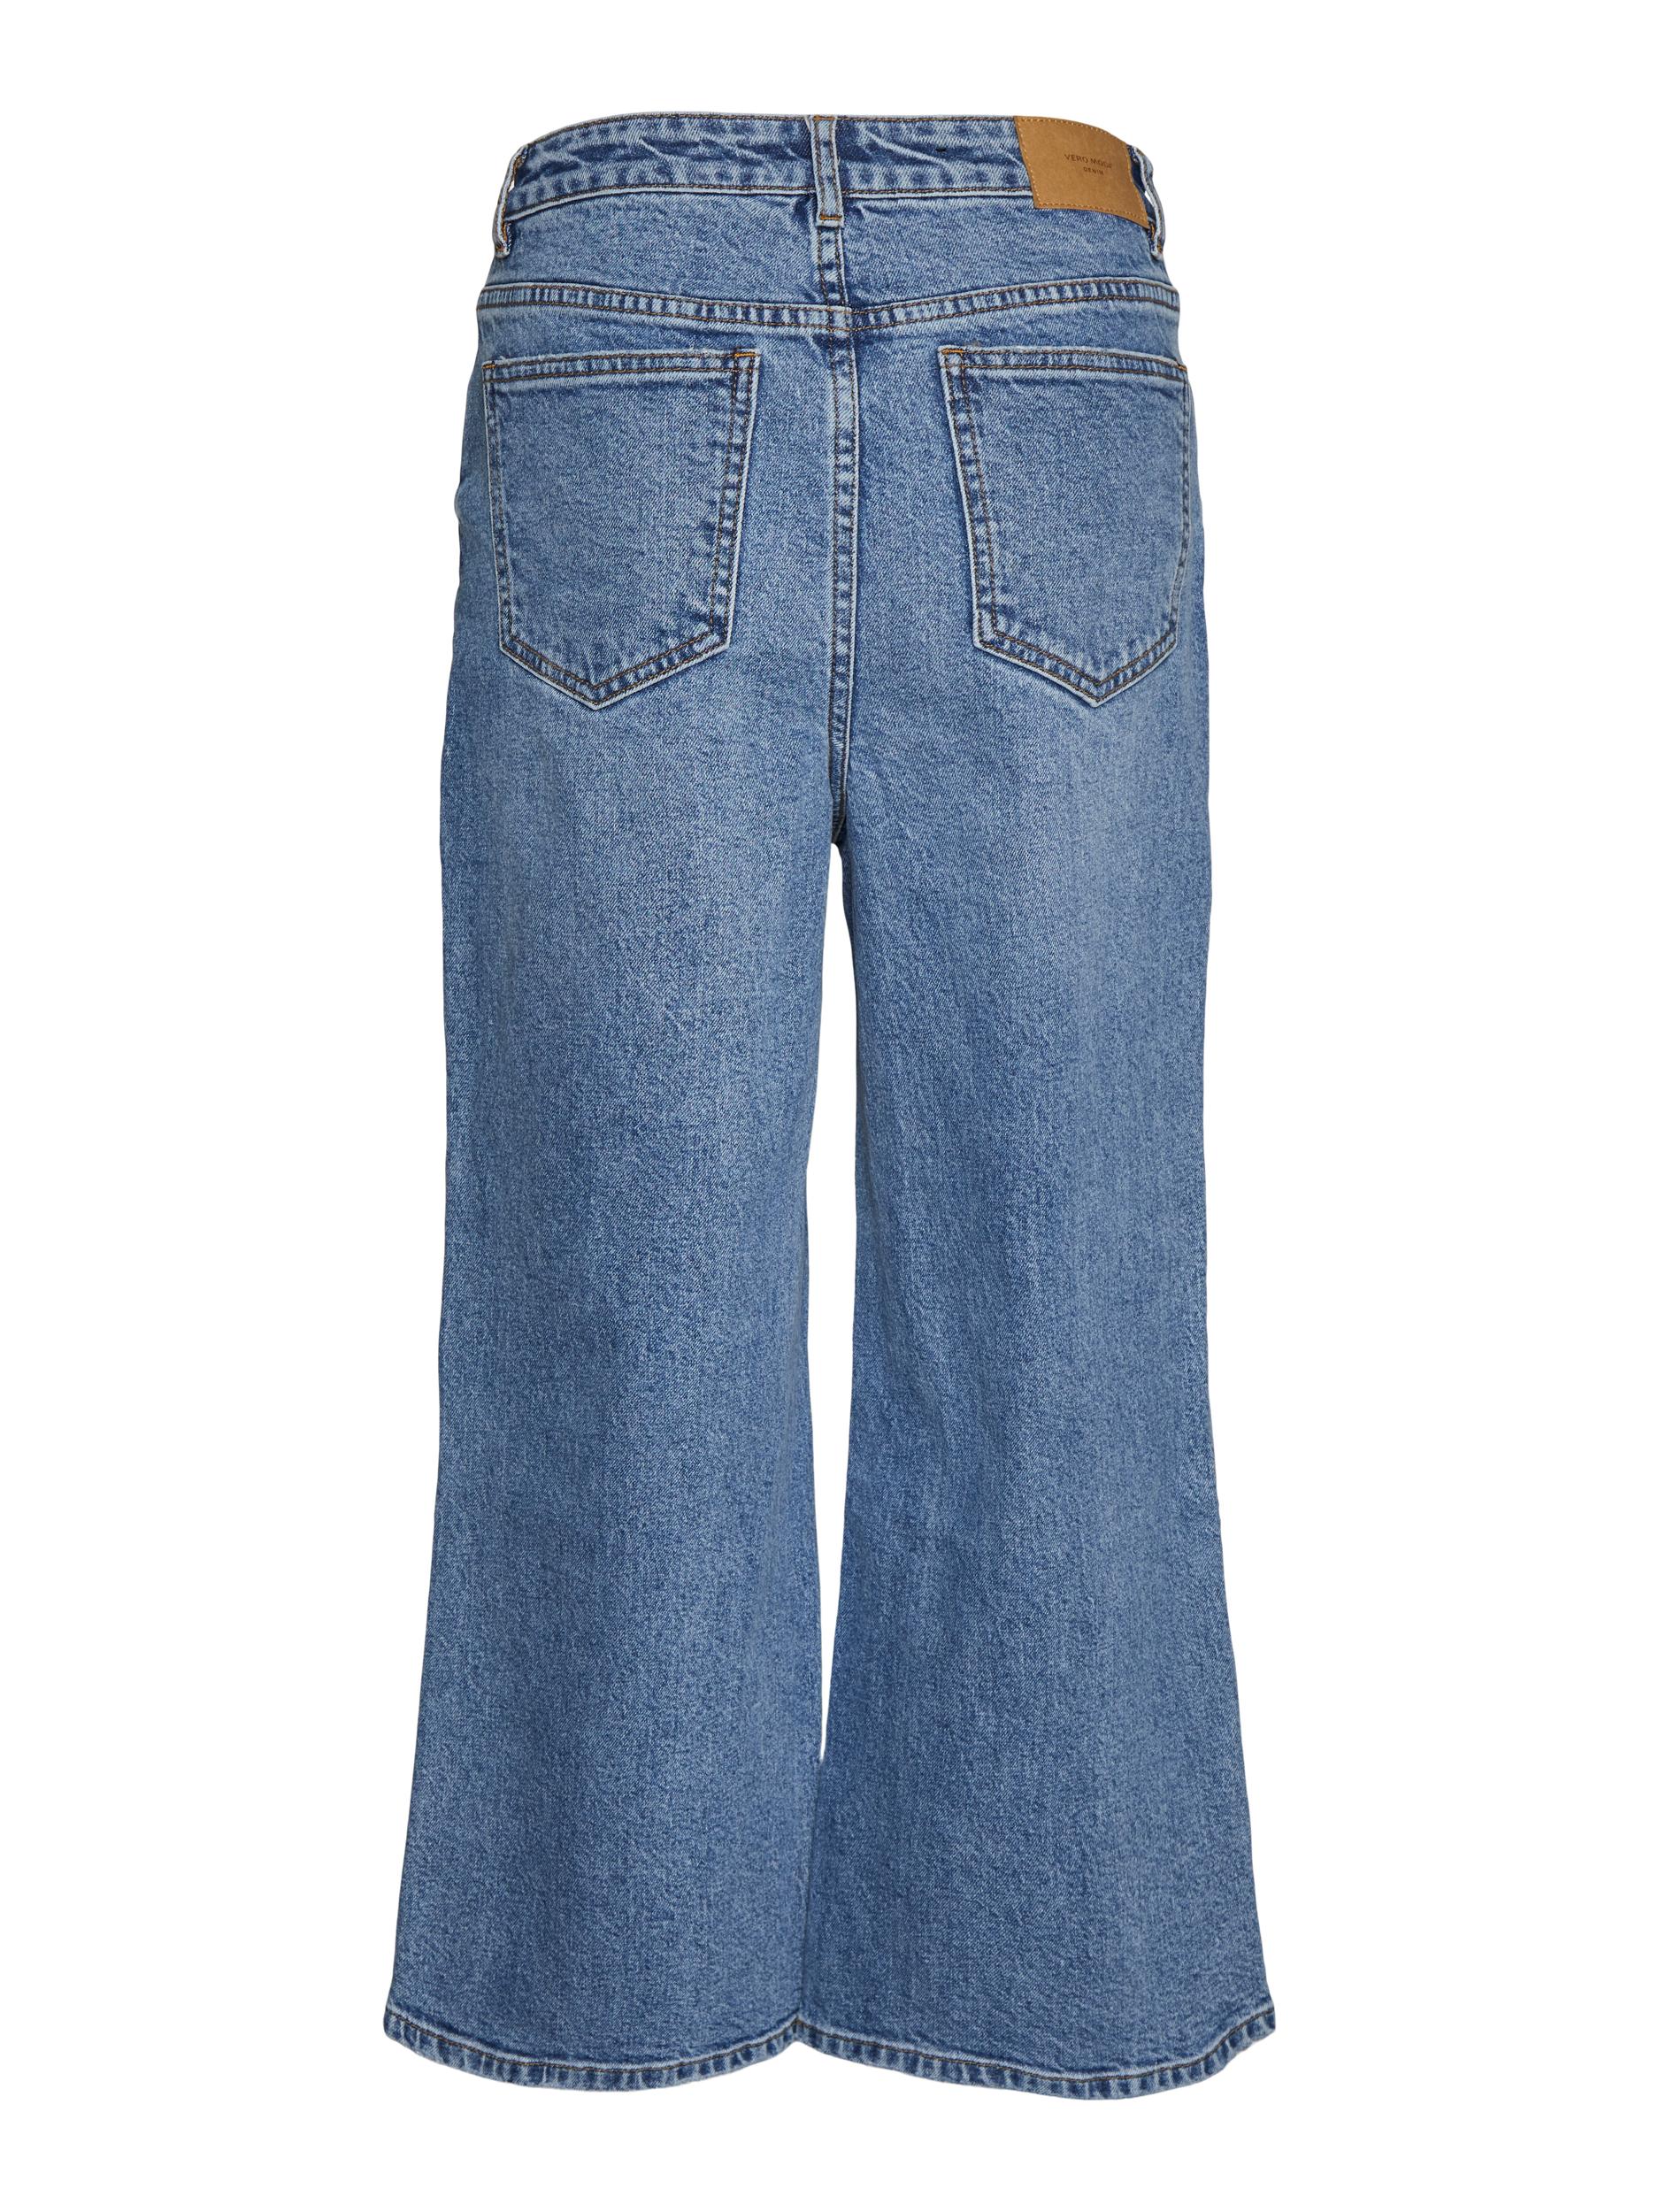 Vero Moda Kathy Jeans, Light Blue Denim, W28/L32